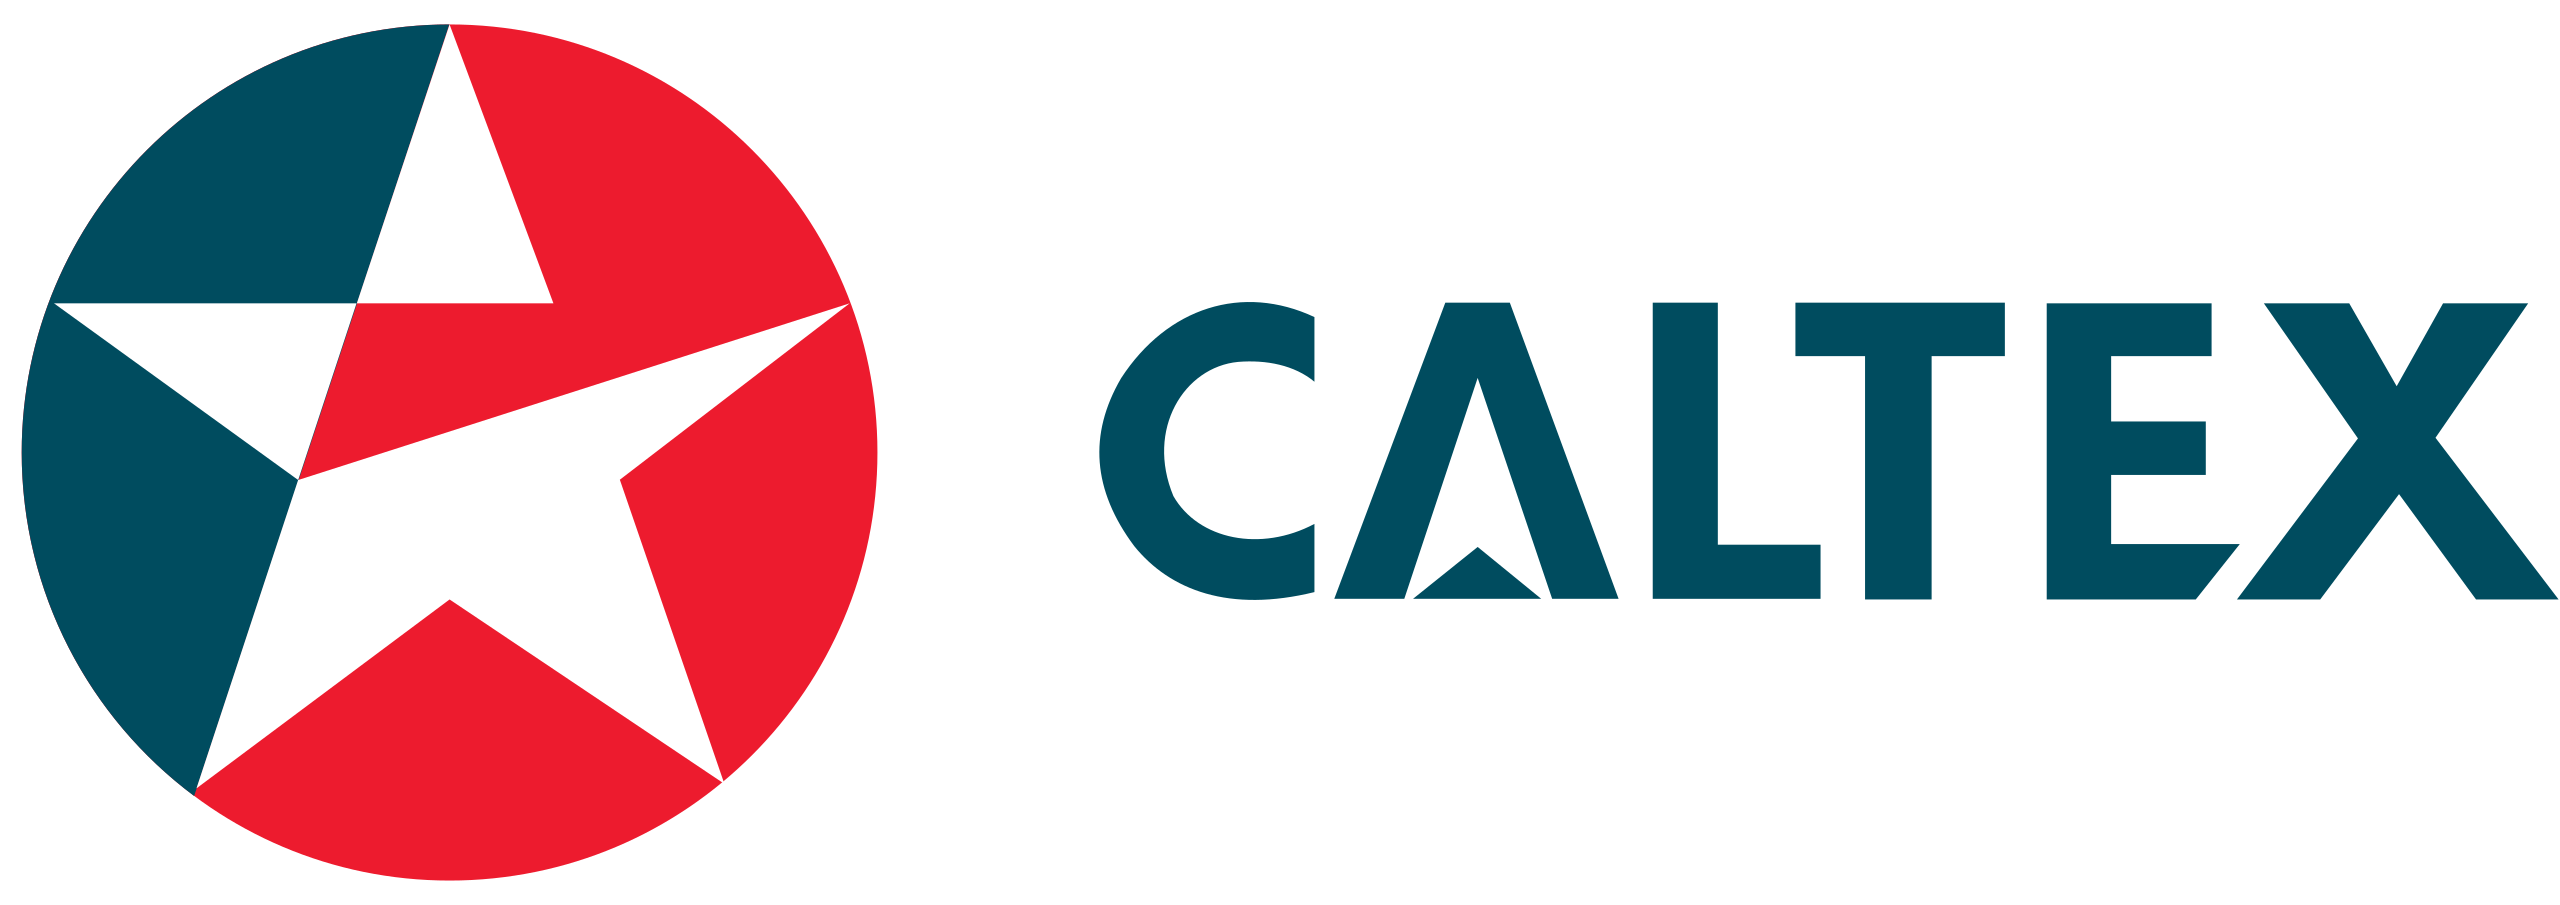 Pezulu Outdoor Advertising - Caltex Client Logo